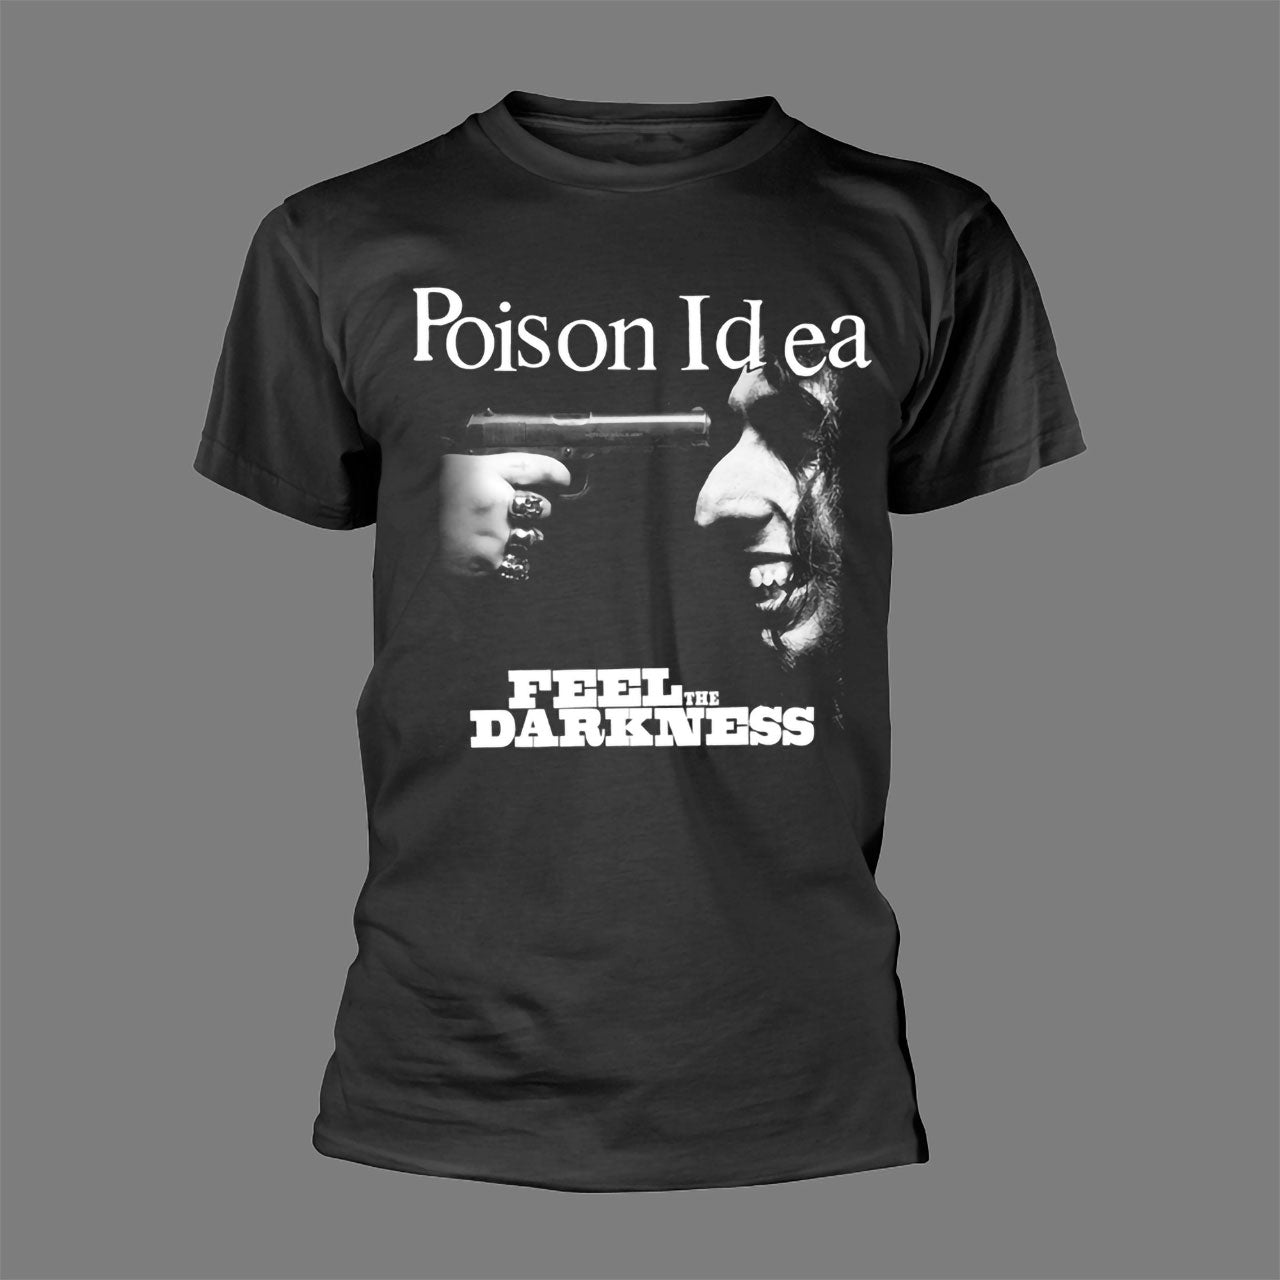 (T-Shirt)　Feel　Darkness　the　Todestrieb　Poison　Idea